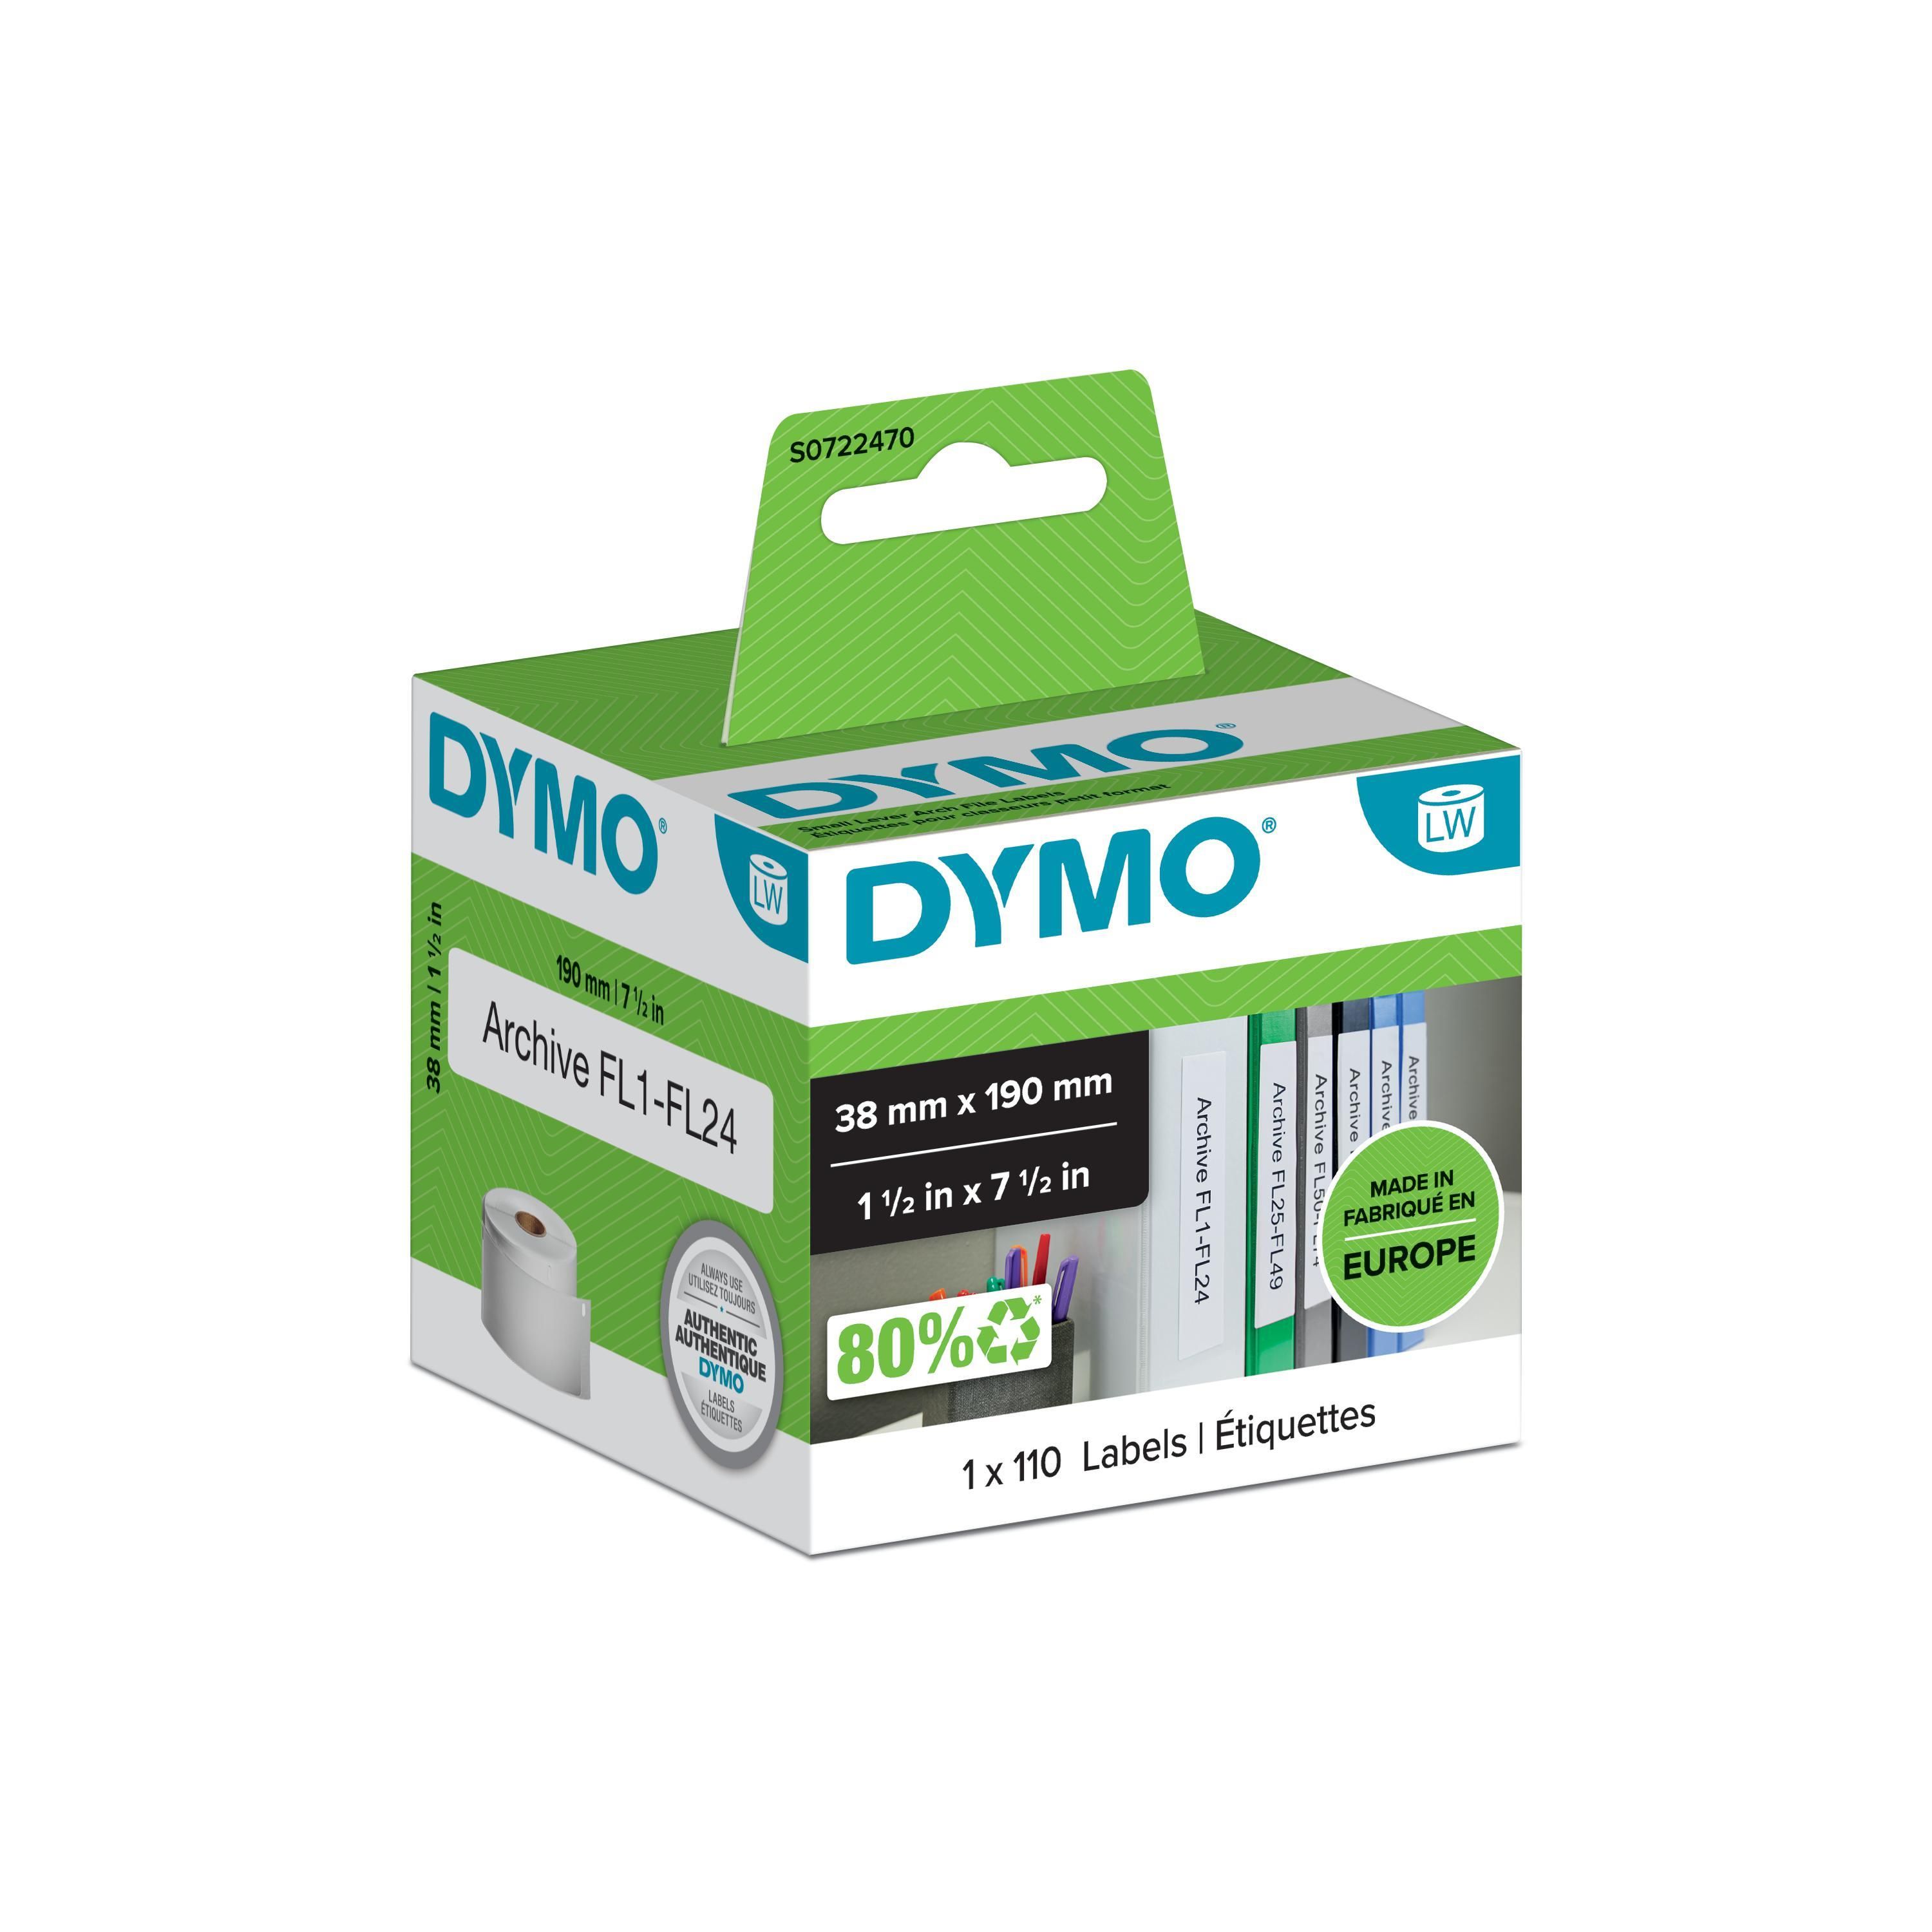 Dymo Cf110 Etichette Labelwriter